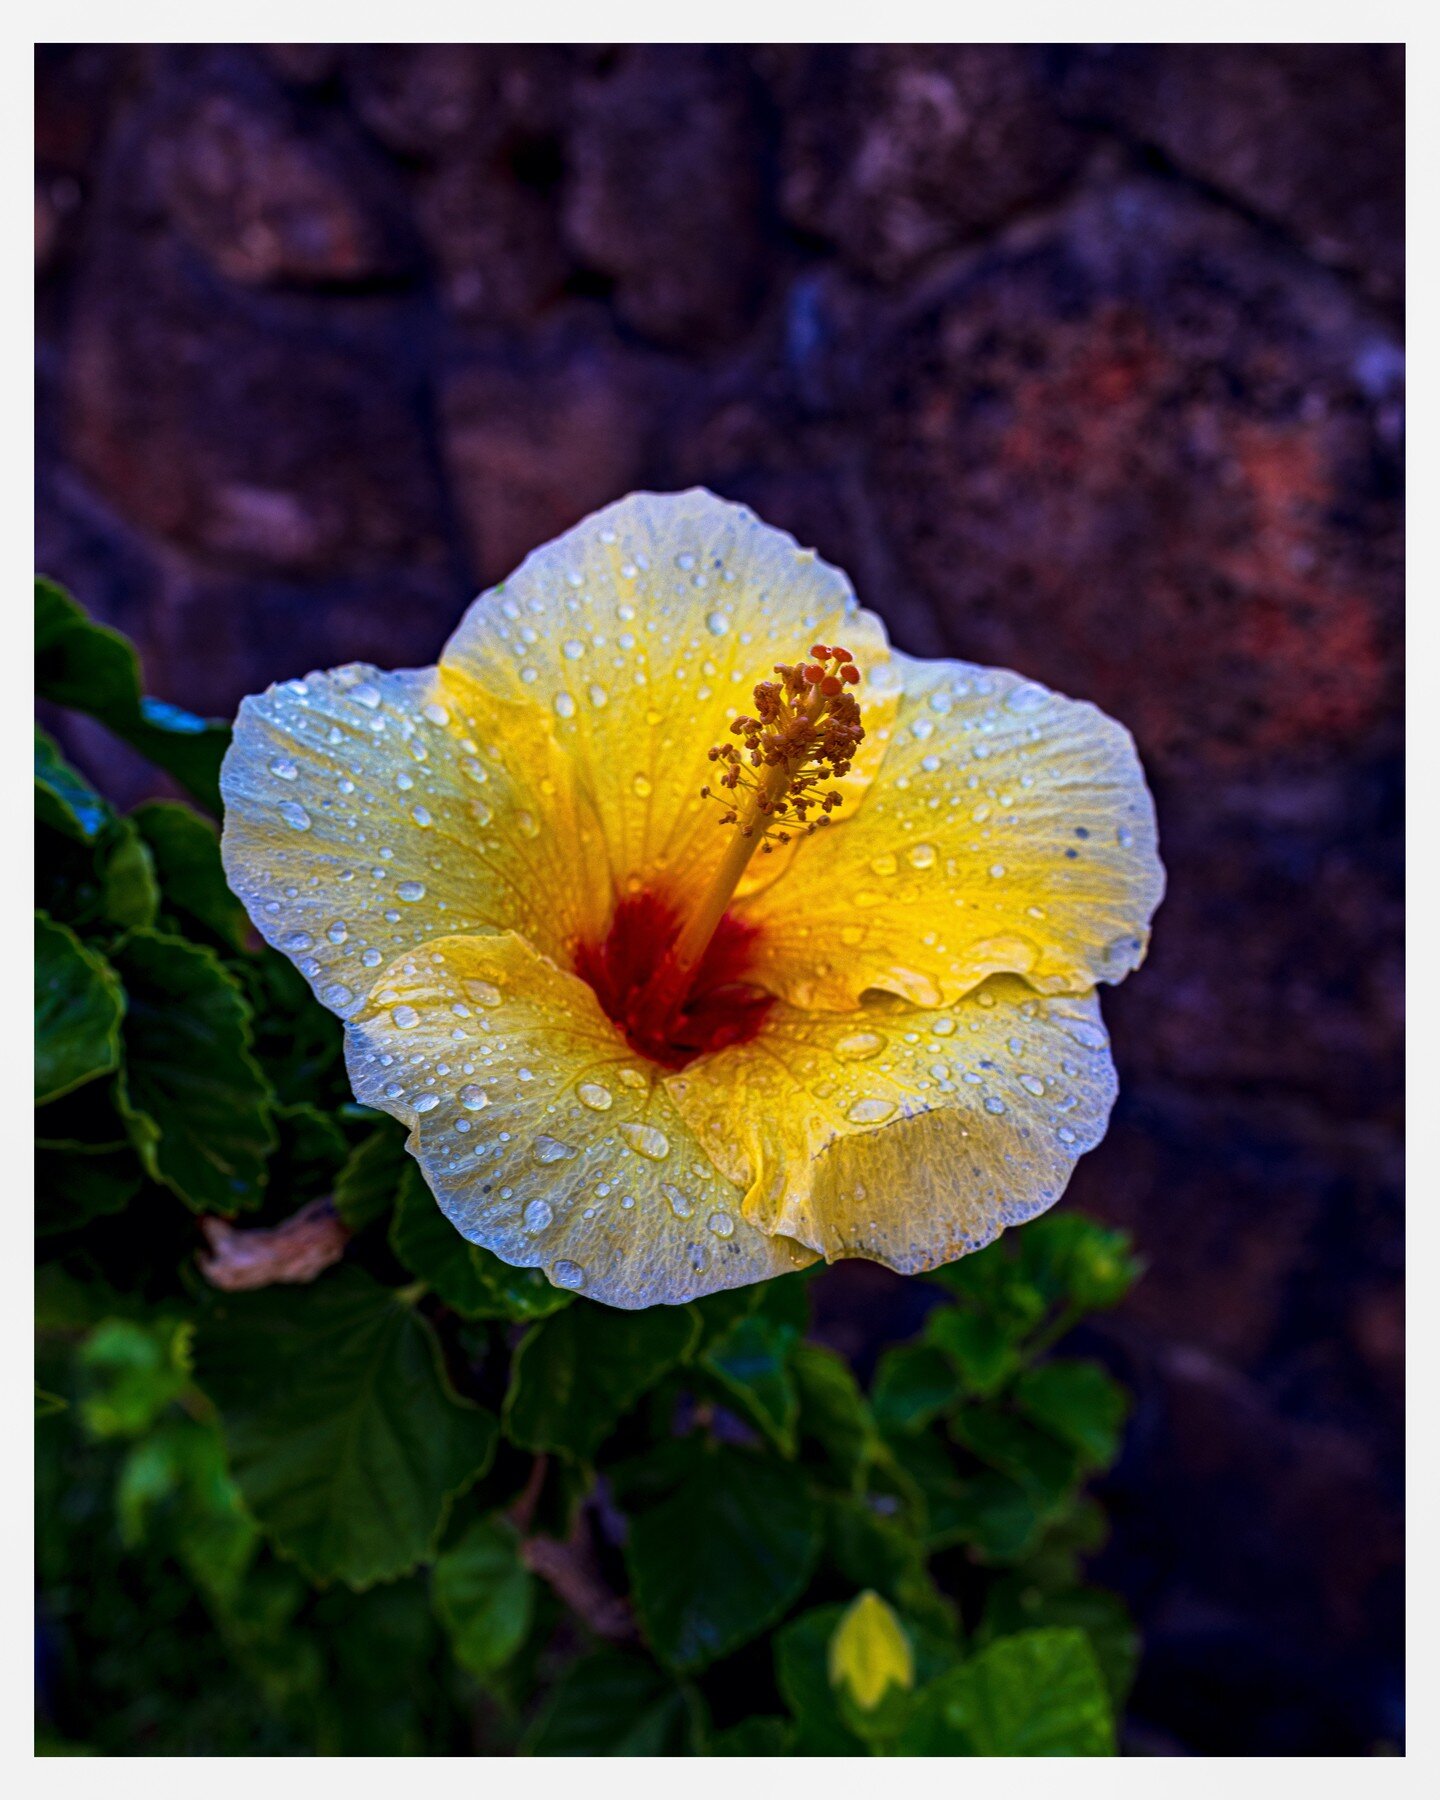 The state flower of Hawaii, a beautiful yellow hibiscus flower as seen on the Isle of Kauai last week!! 

#kauai #poipubeach #canonphotography #flowers #canonr5 #hibiscus #hawaii #bestoftheday #bestofthe_usa #travelphotography #travelhawaii #visitkau